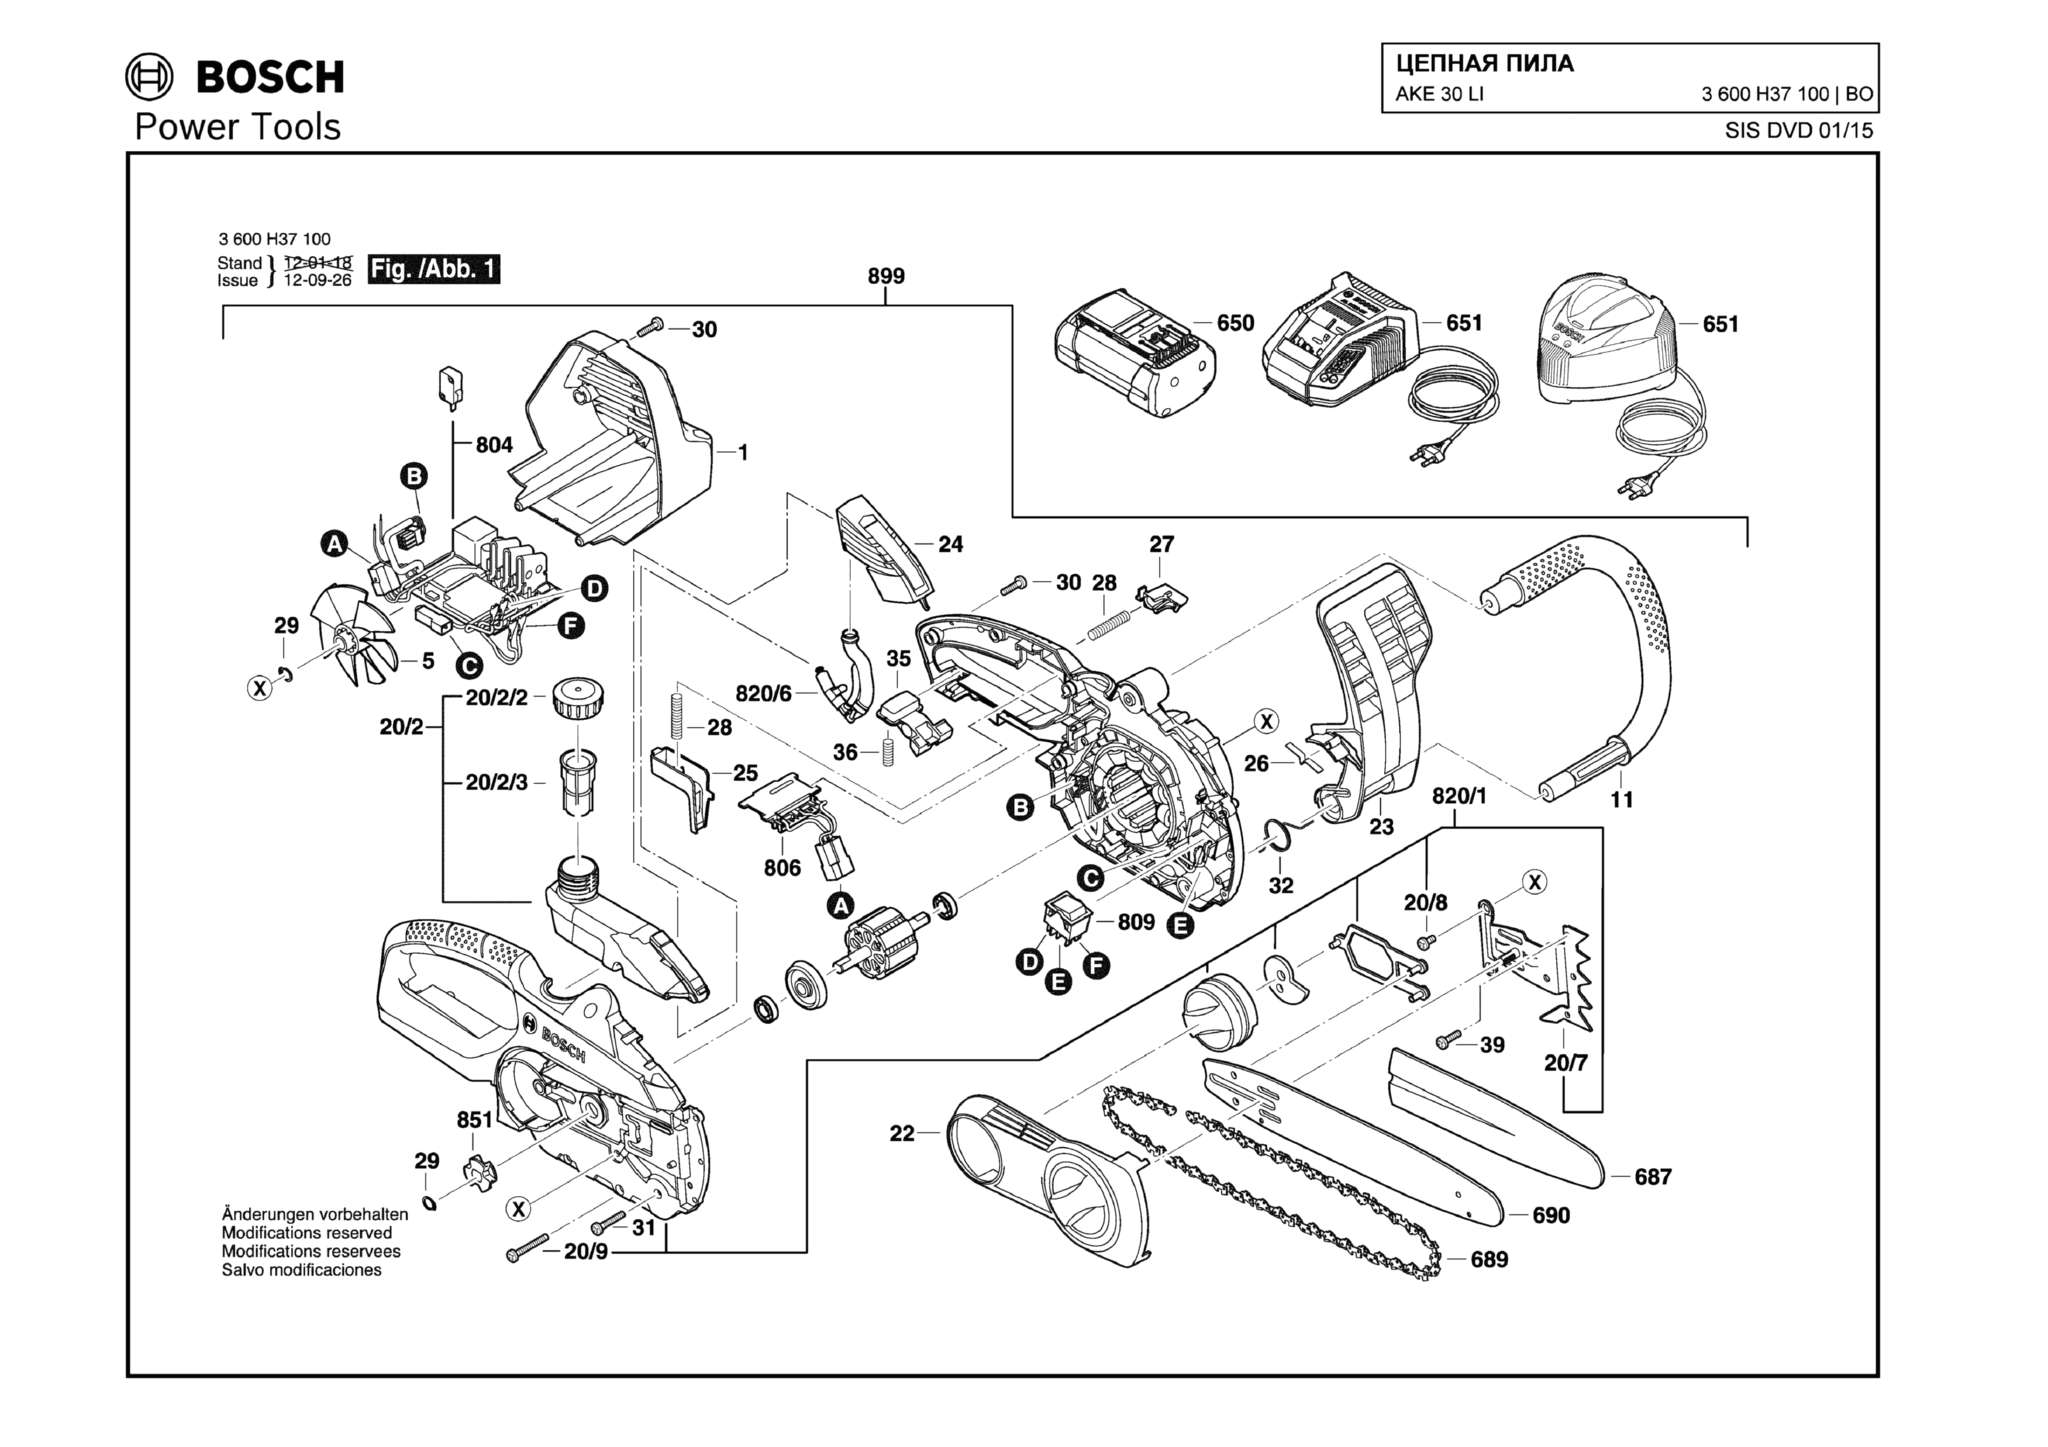 Запчасти, схема и деталировка Bosch AKE 30 LI (ТИП 3600H37100)